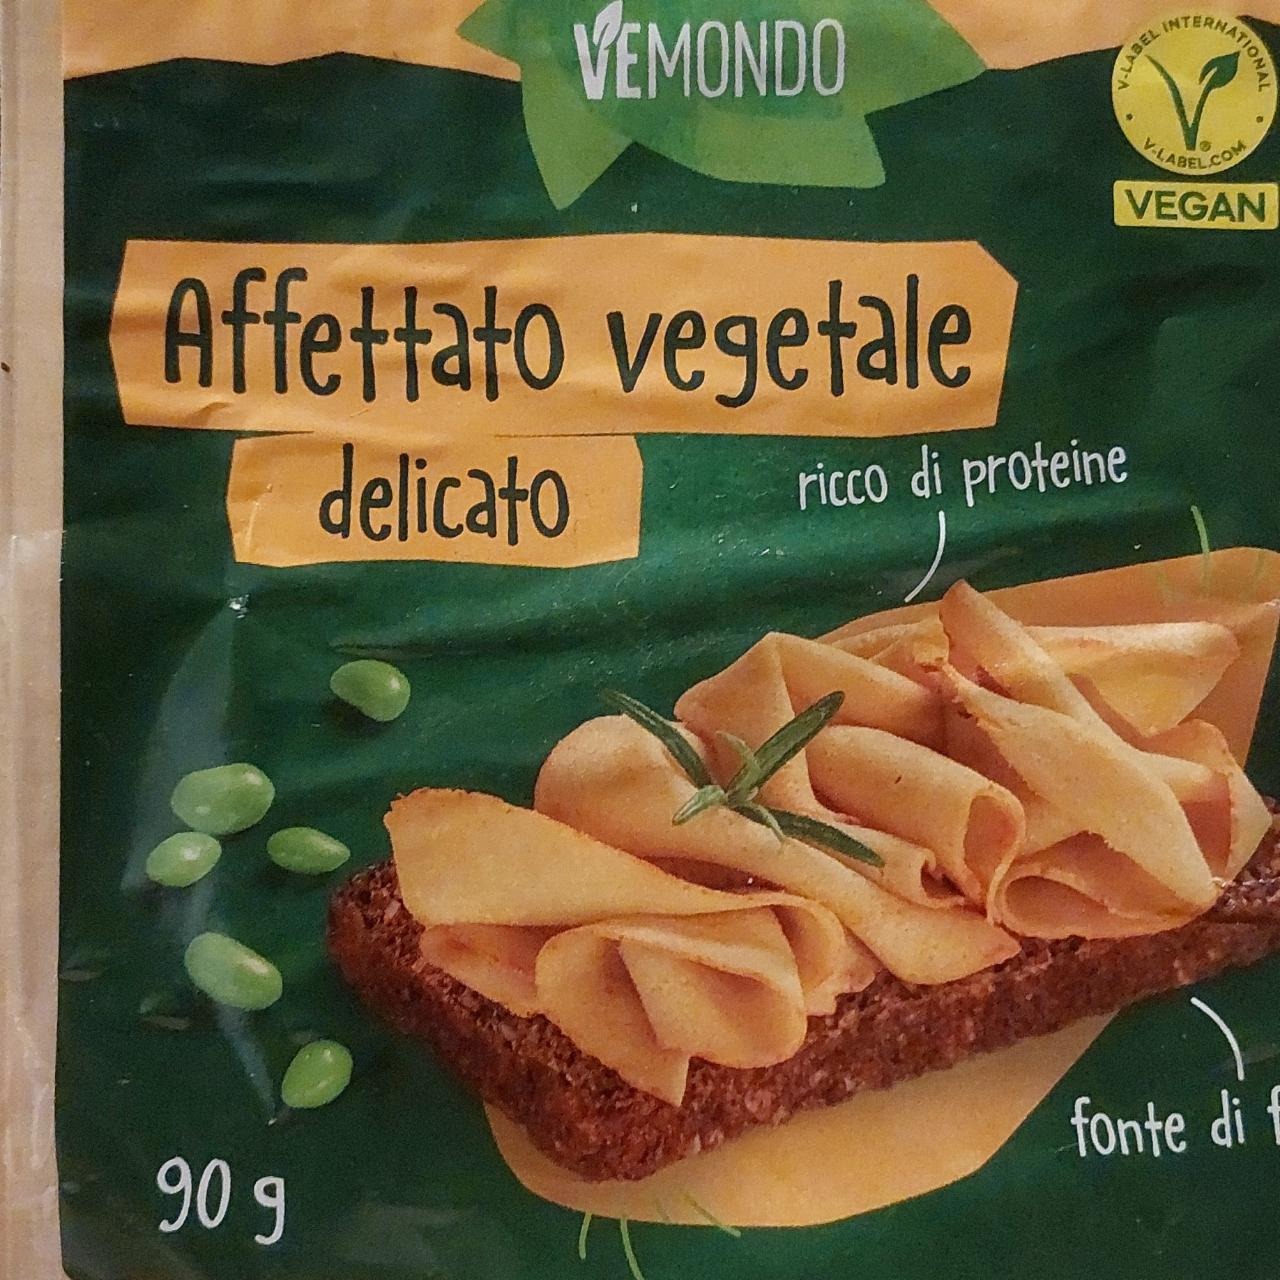 Zdjęcia - Affettato vegetale delicato Vemondo